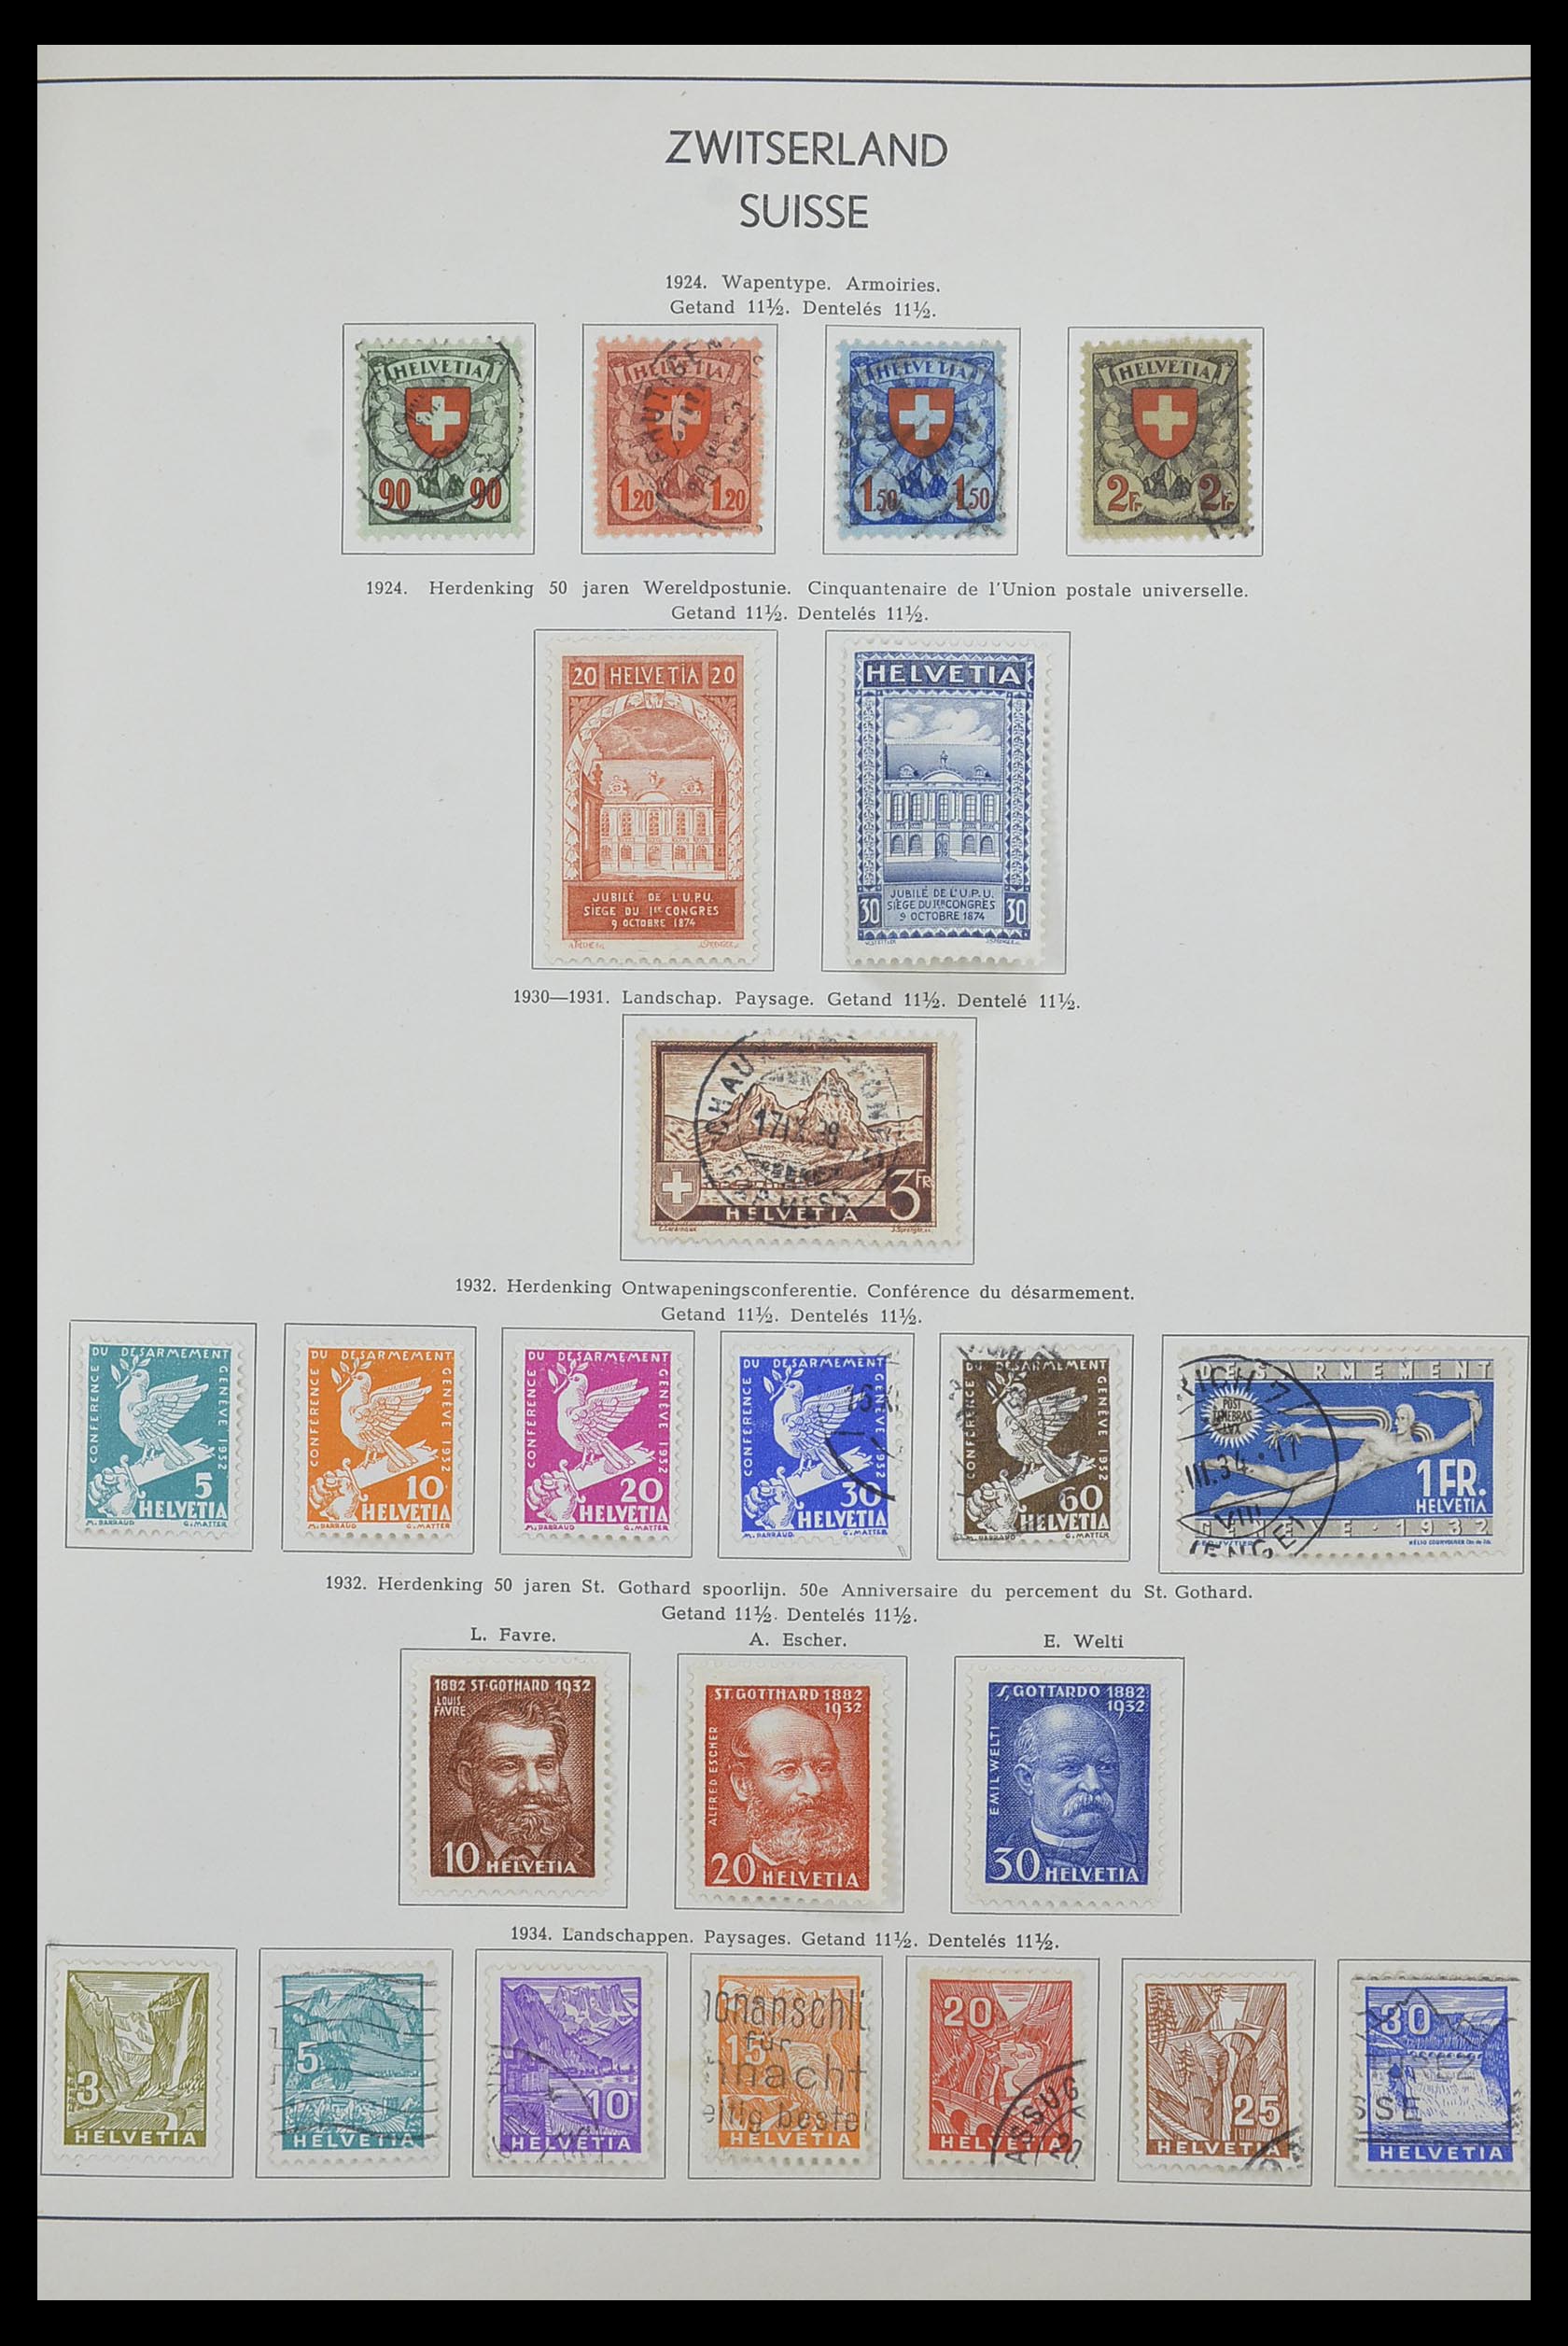 33601 012 - Stamp collection 33601 Switzerland 1854-1985.